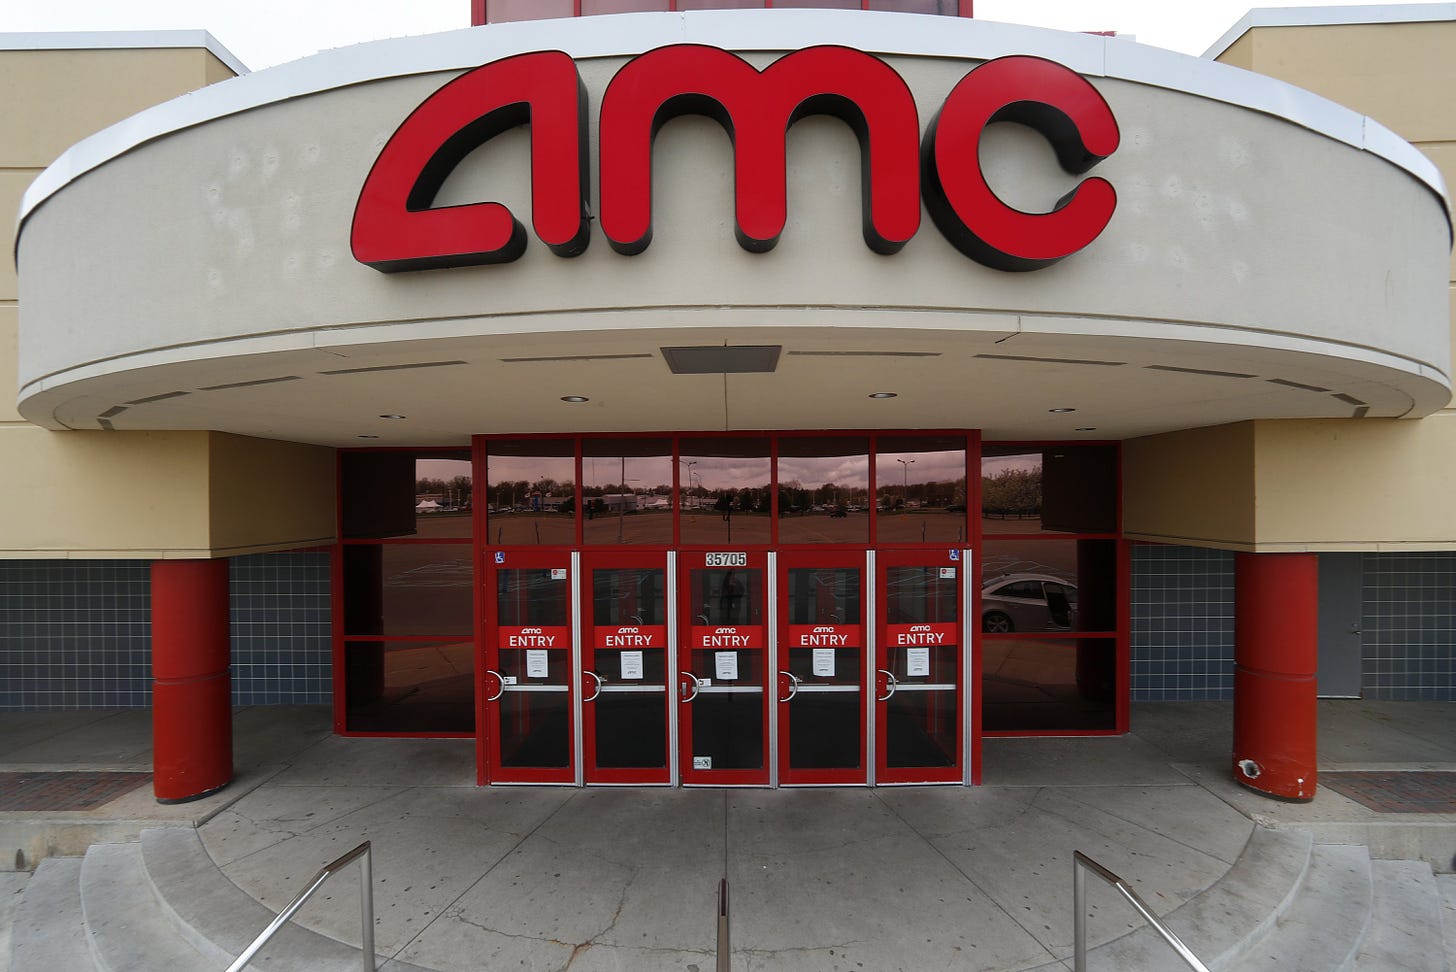 Prepare the popcorn: AMC opening more movie theaters | AP News